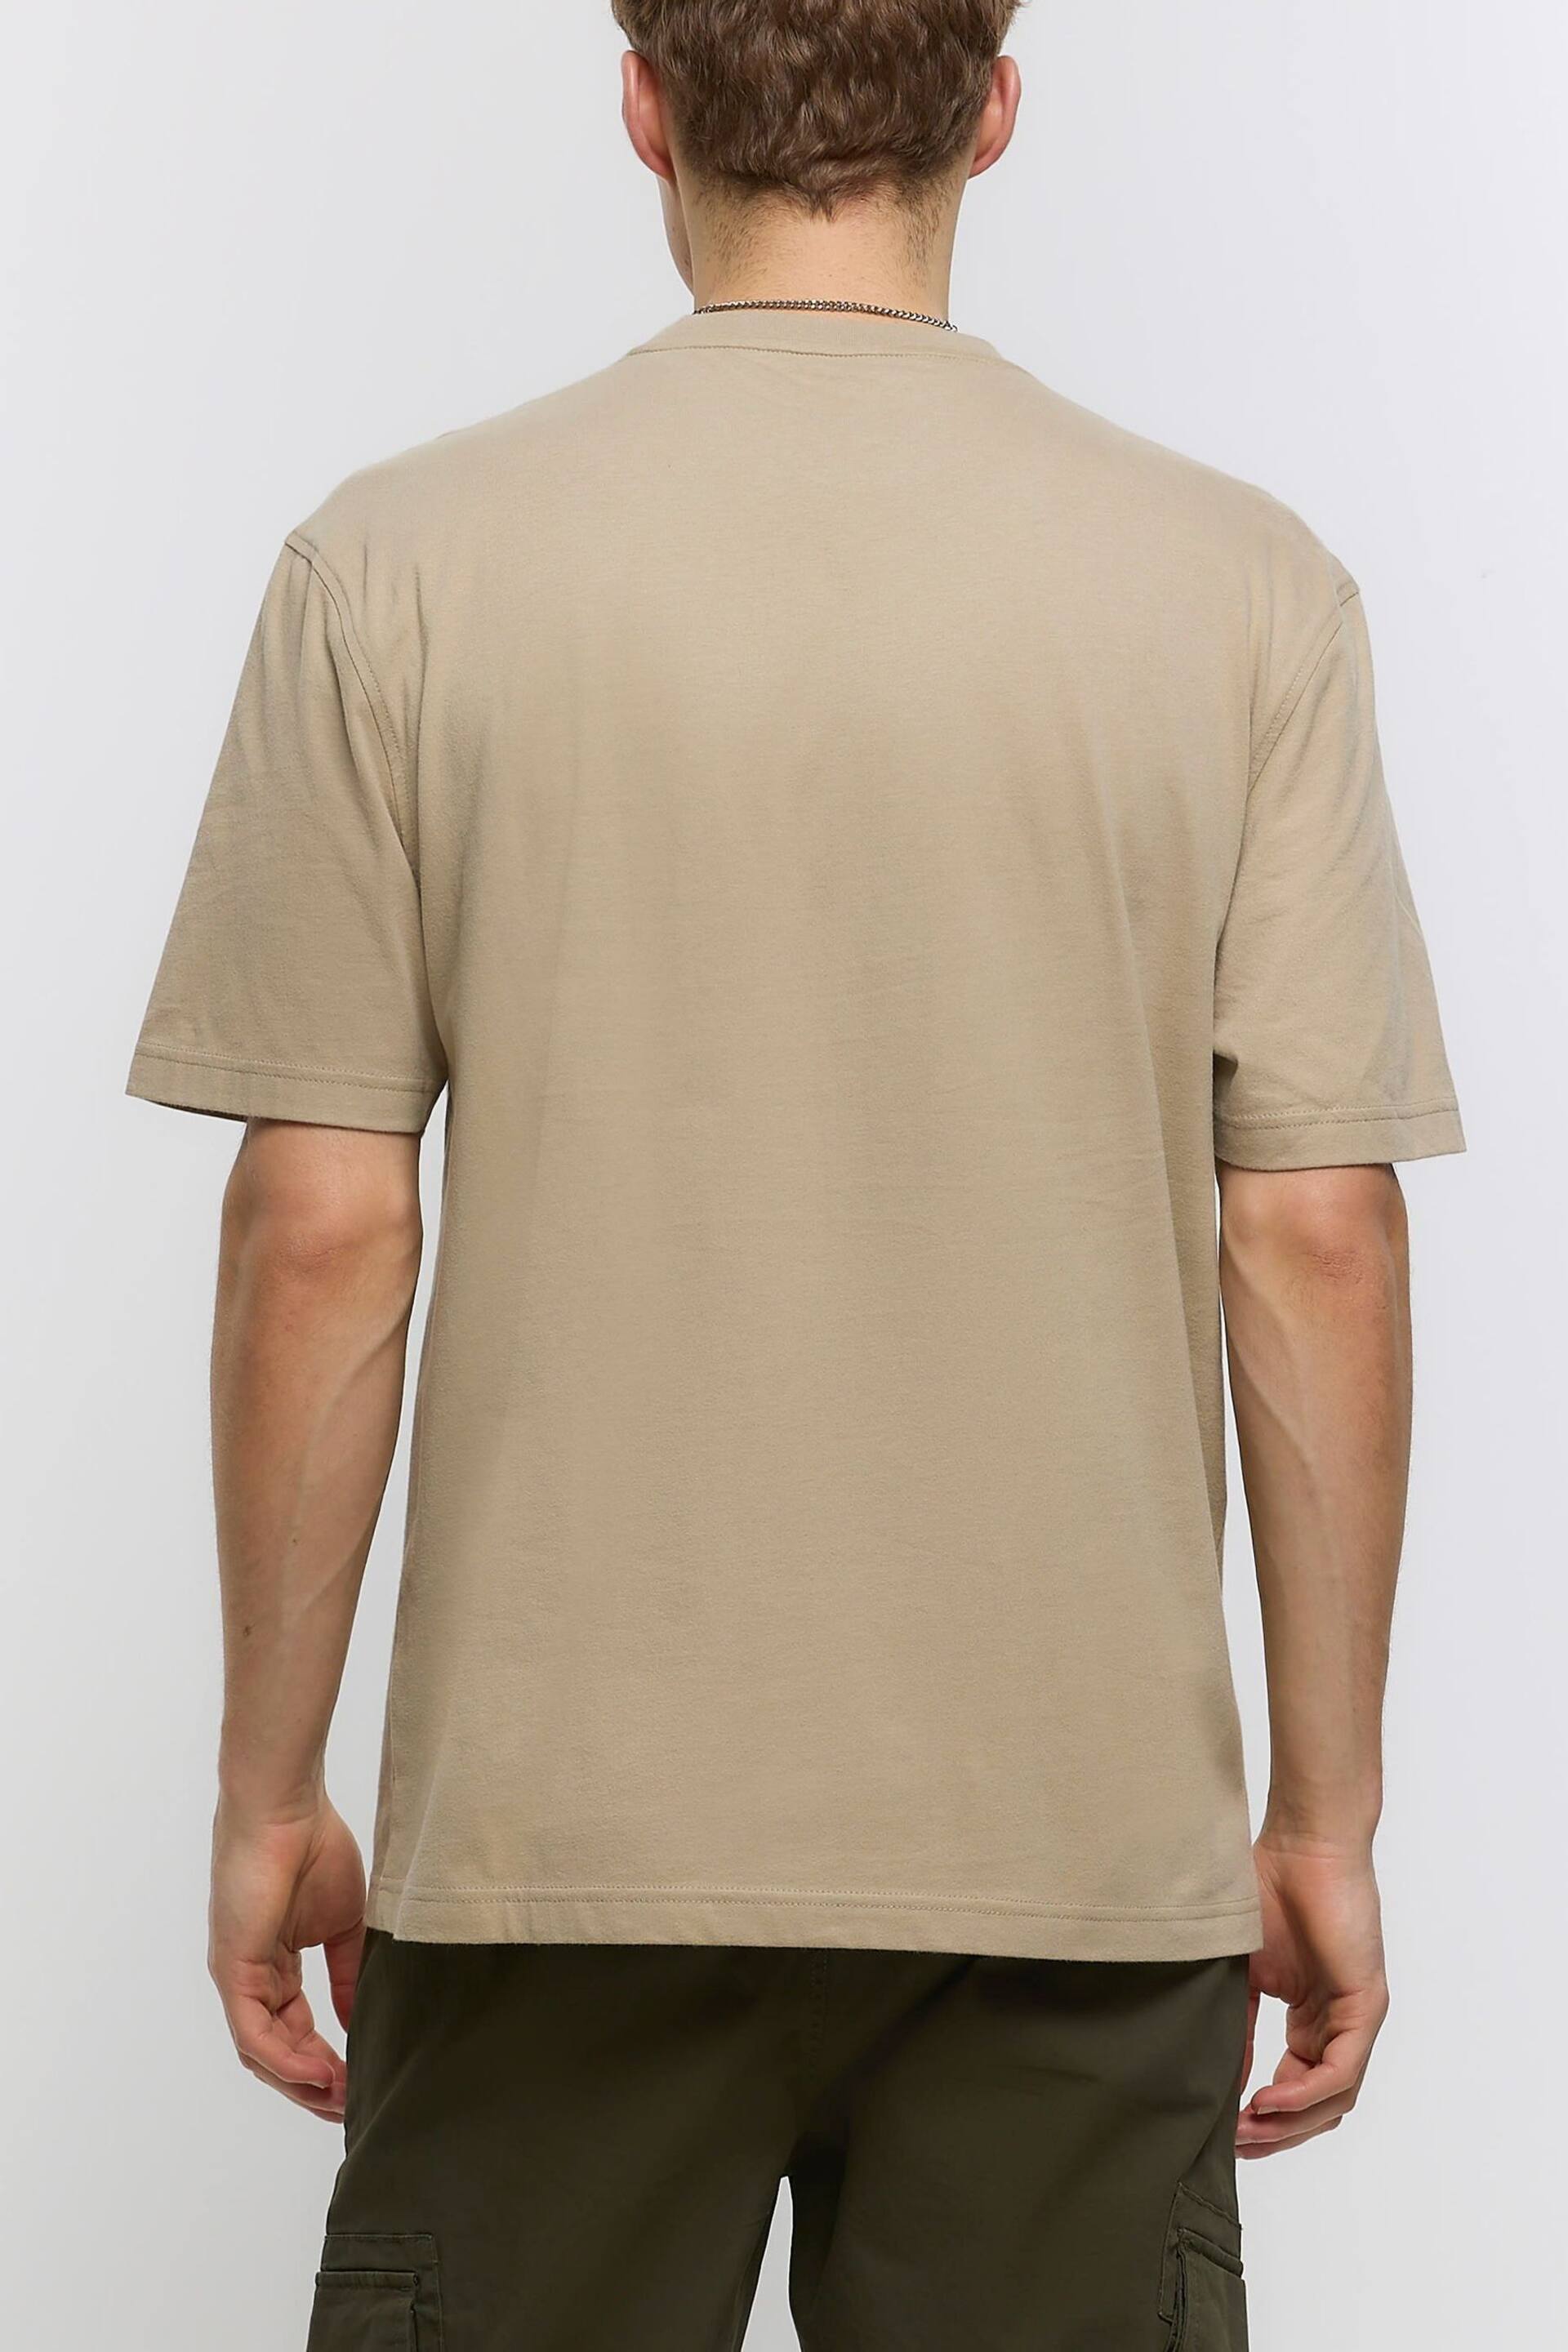 River Island Stone Natural Regular Fit T-Shirt - Image 2 of 4